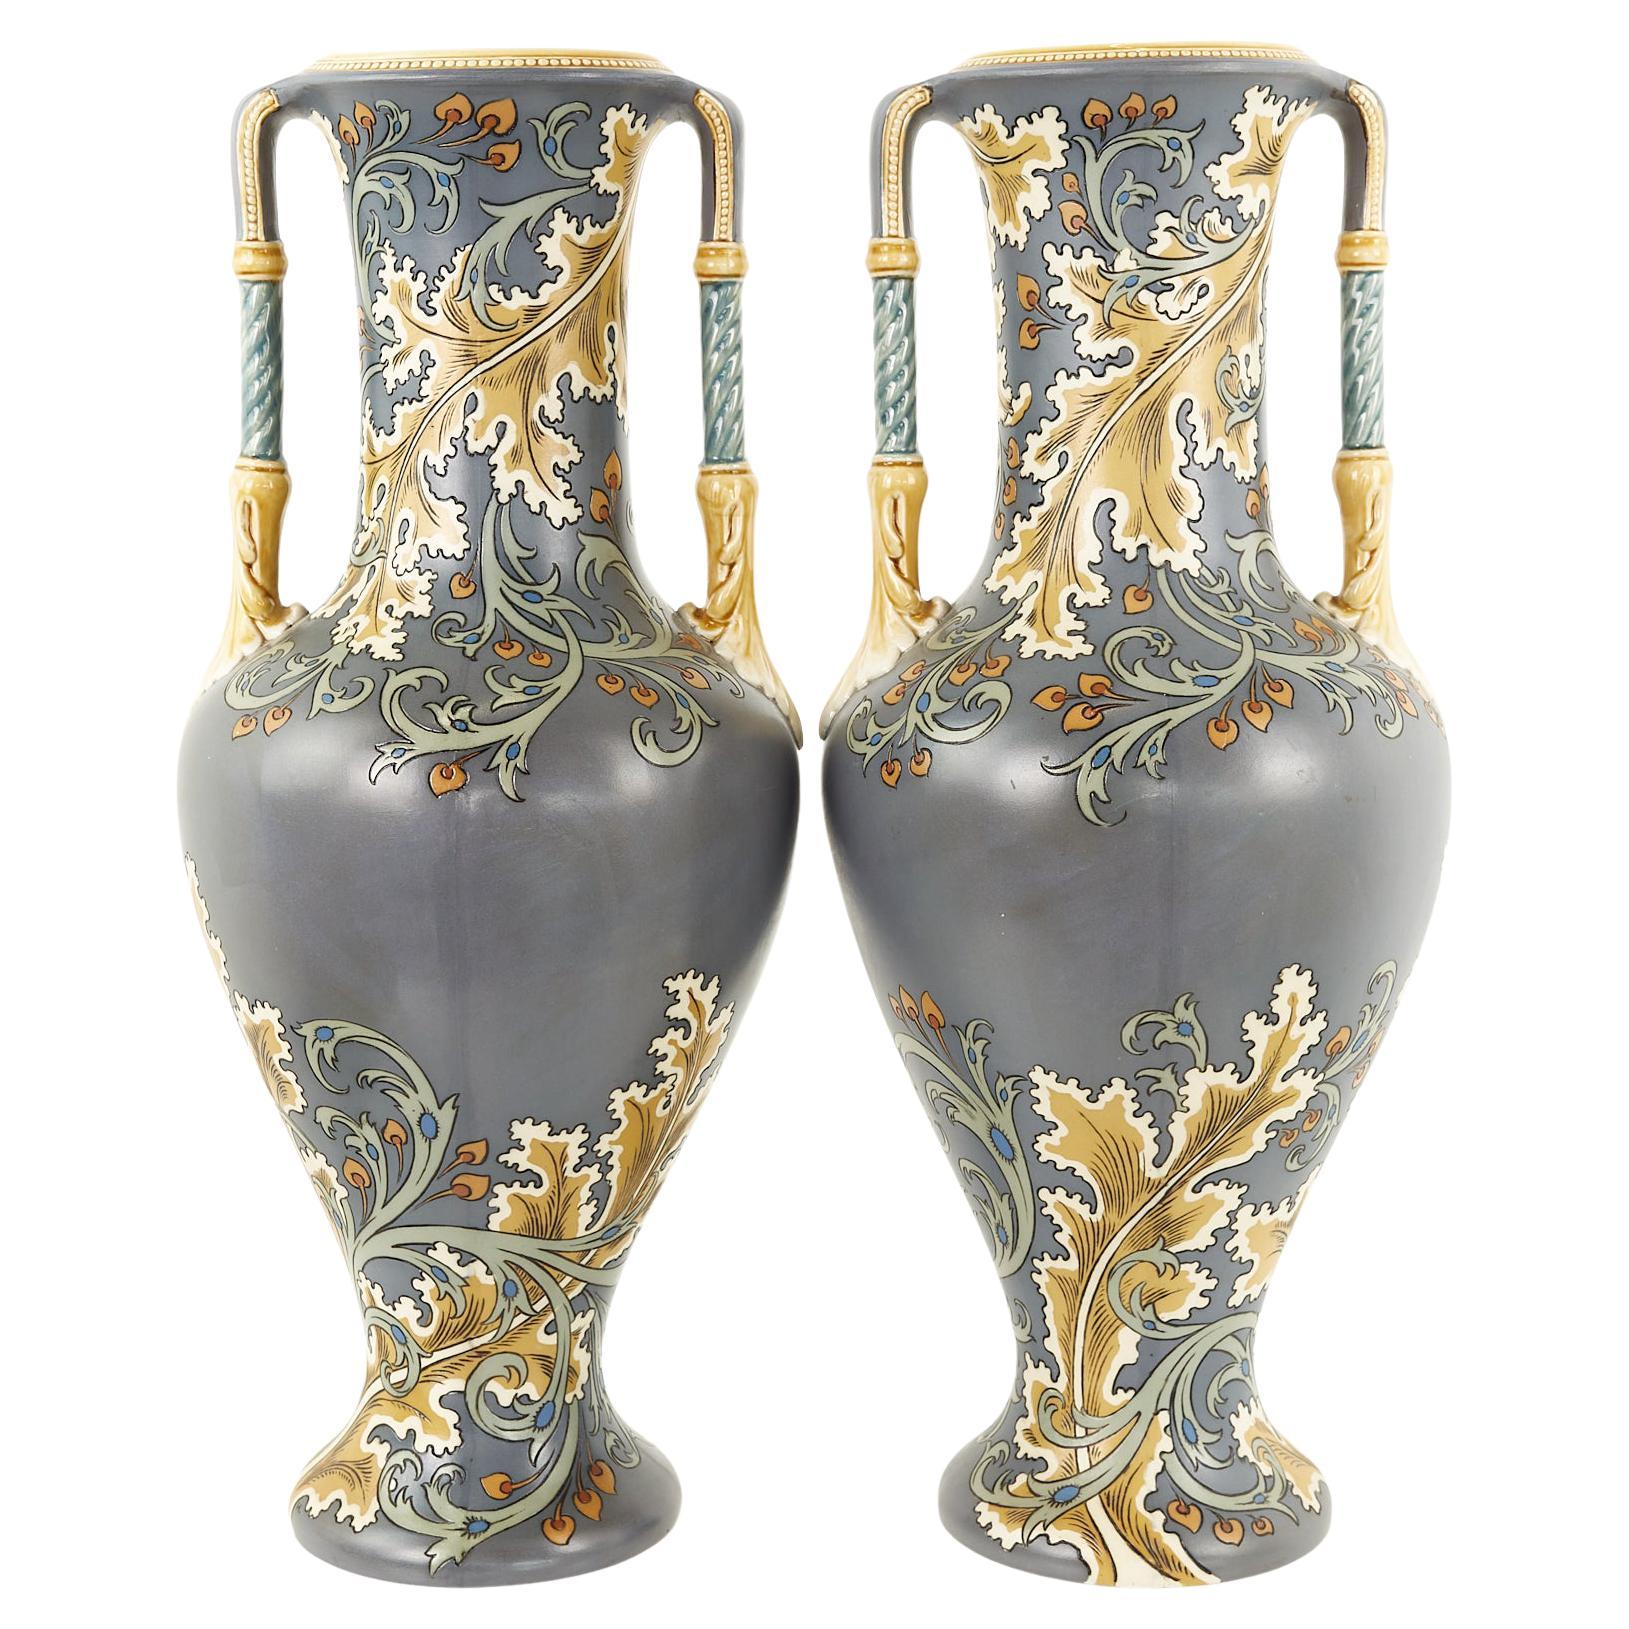 Floral Art Nouveau Vase by Mettlach, Later Villeroy & Boch, a Pair